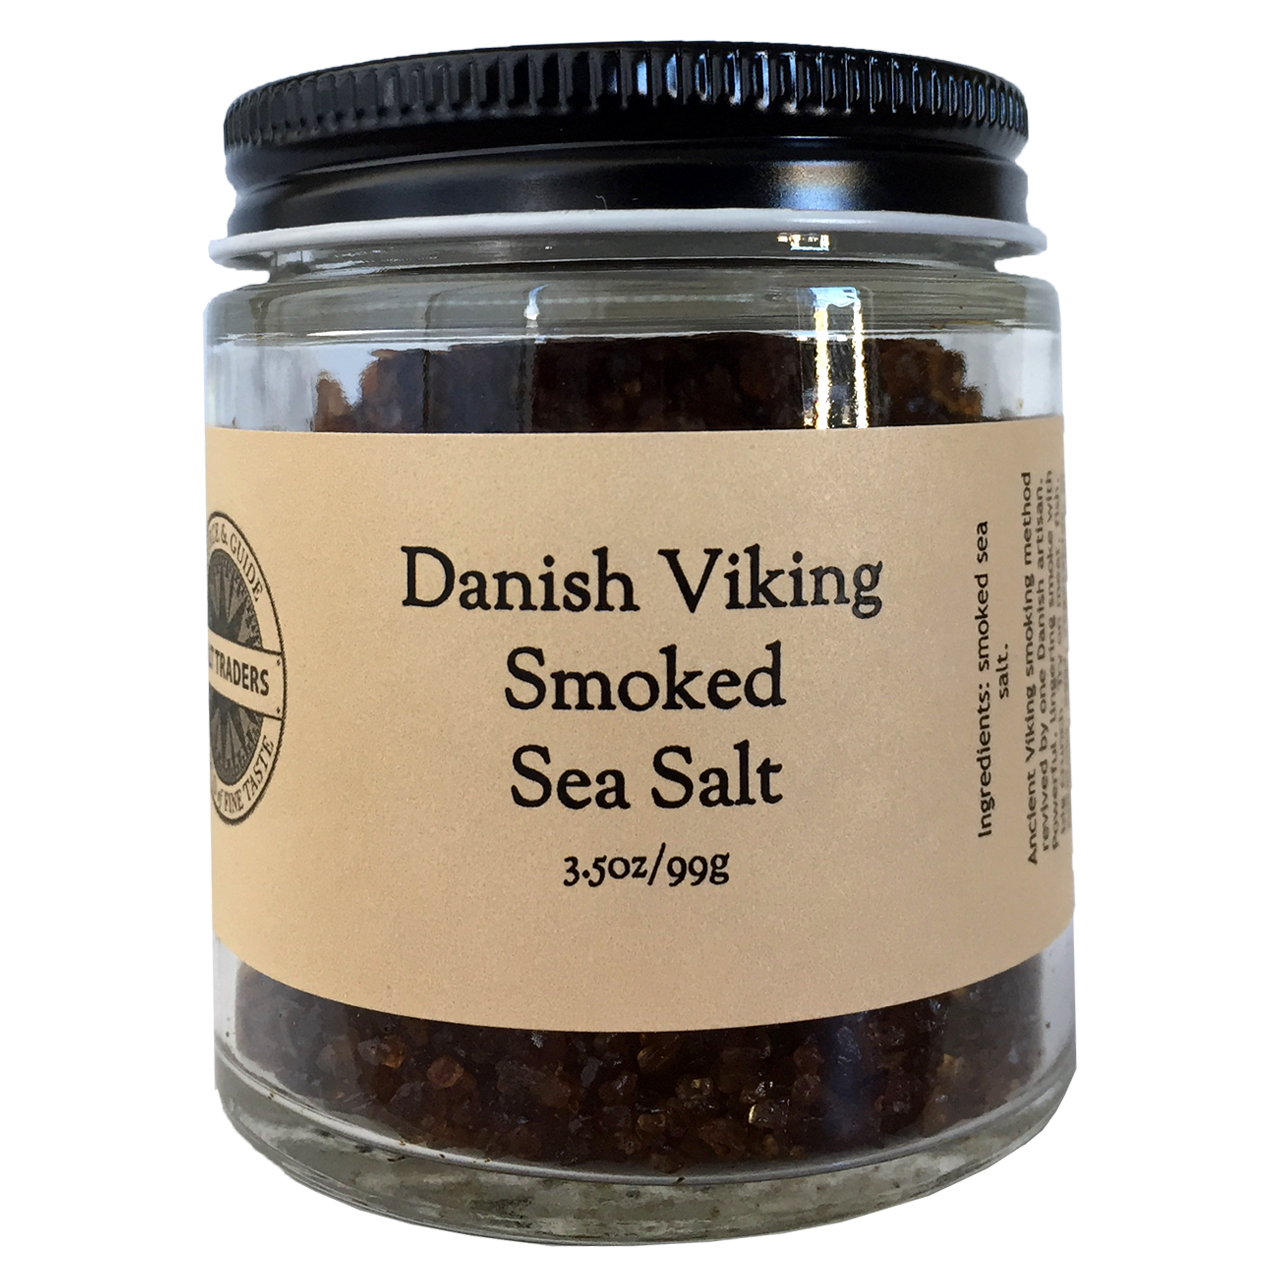 Danish Viking Smoked Sea Salt - Our Exclusive!